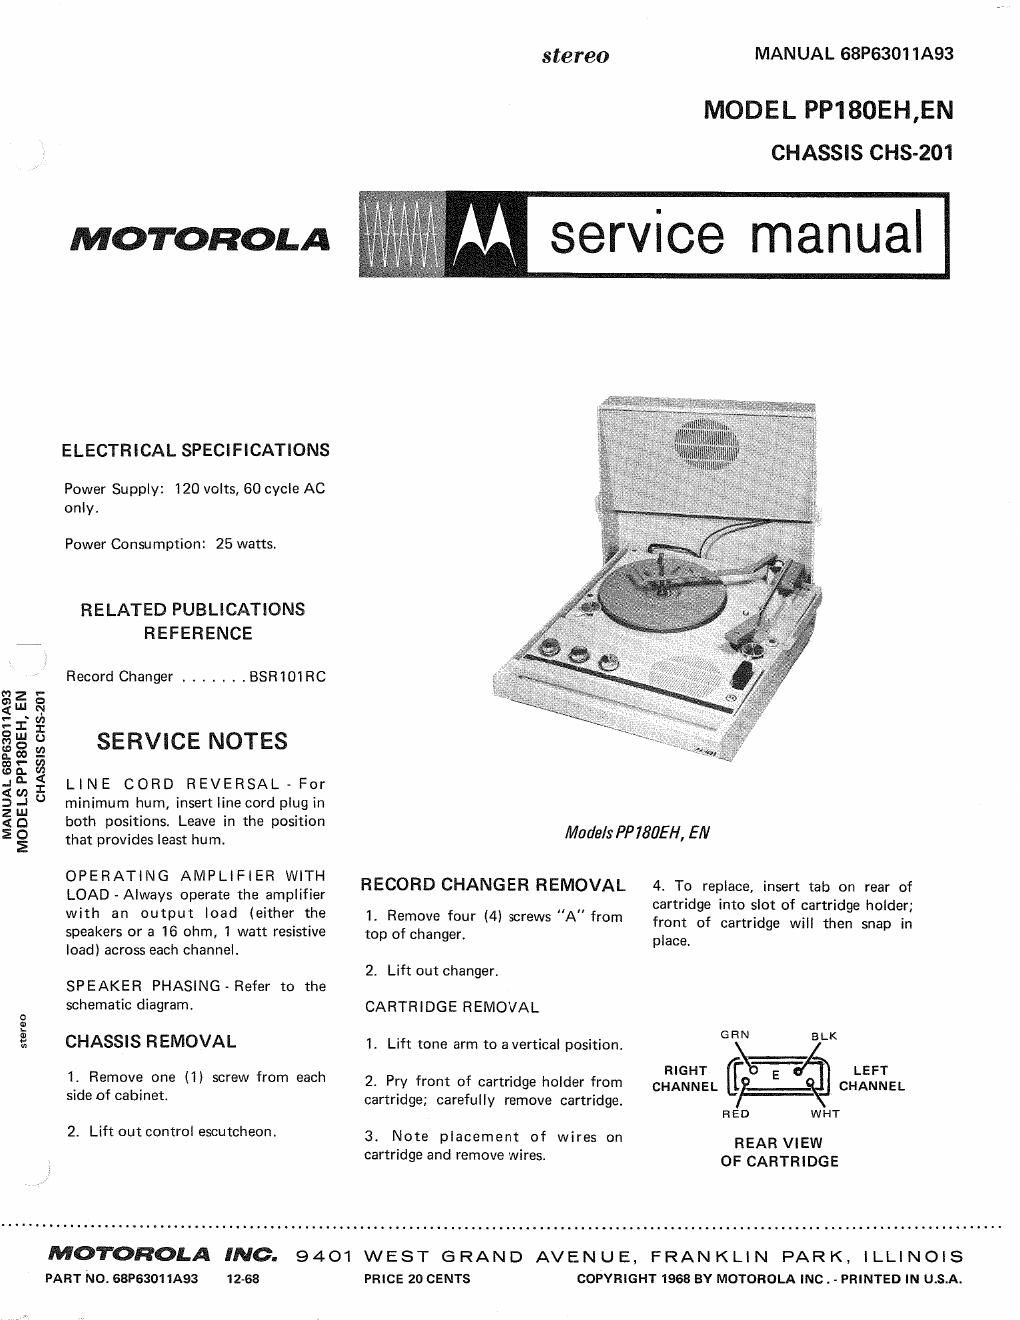 motorola pp 180 en service manual